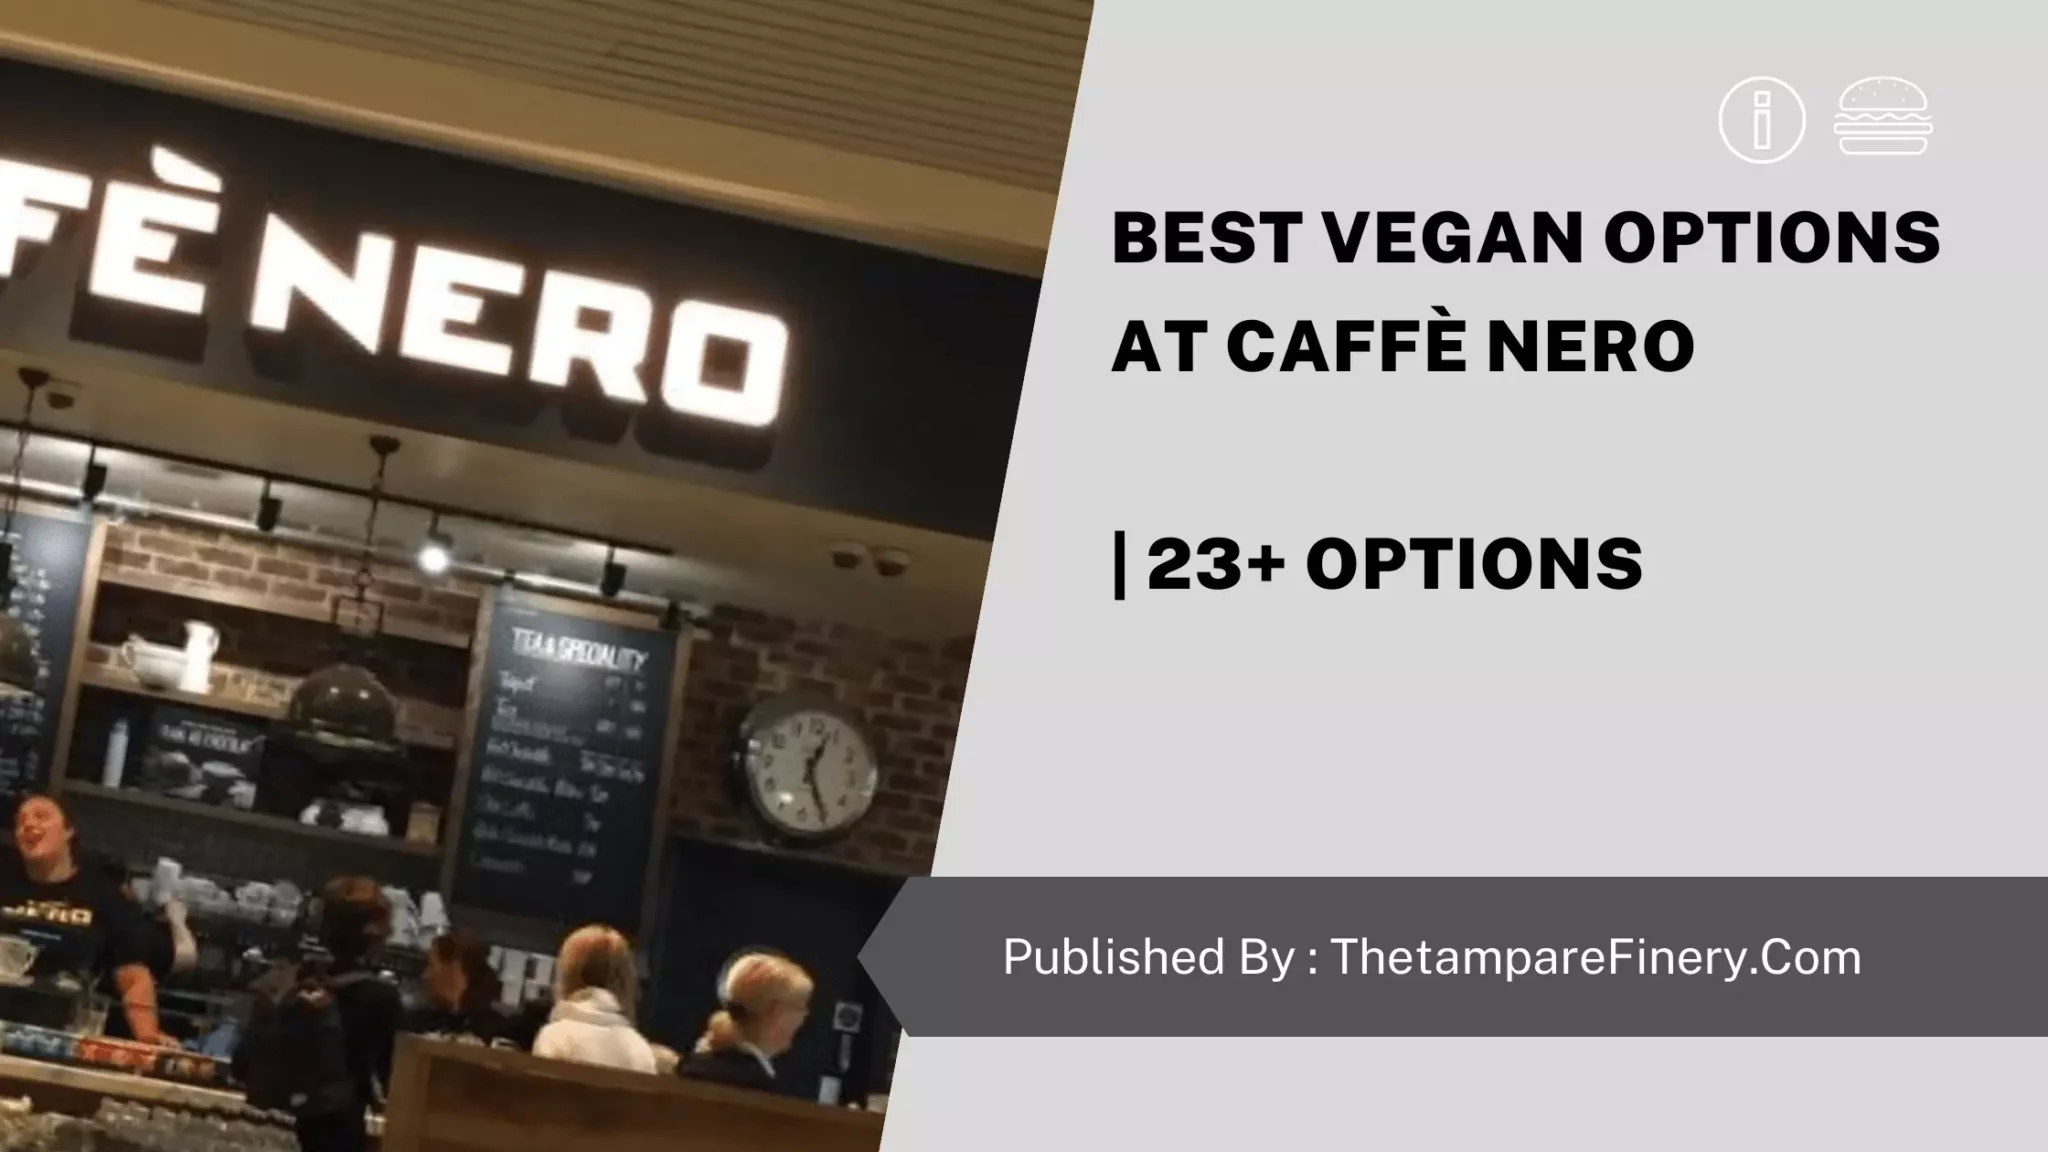 Vegan Options At Caffe Nero